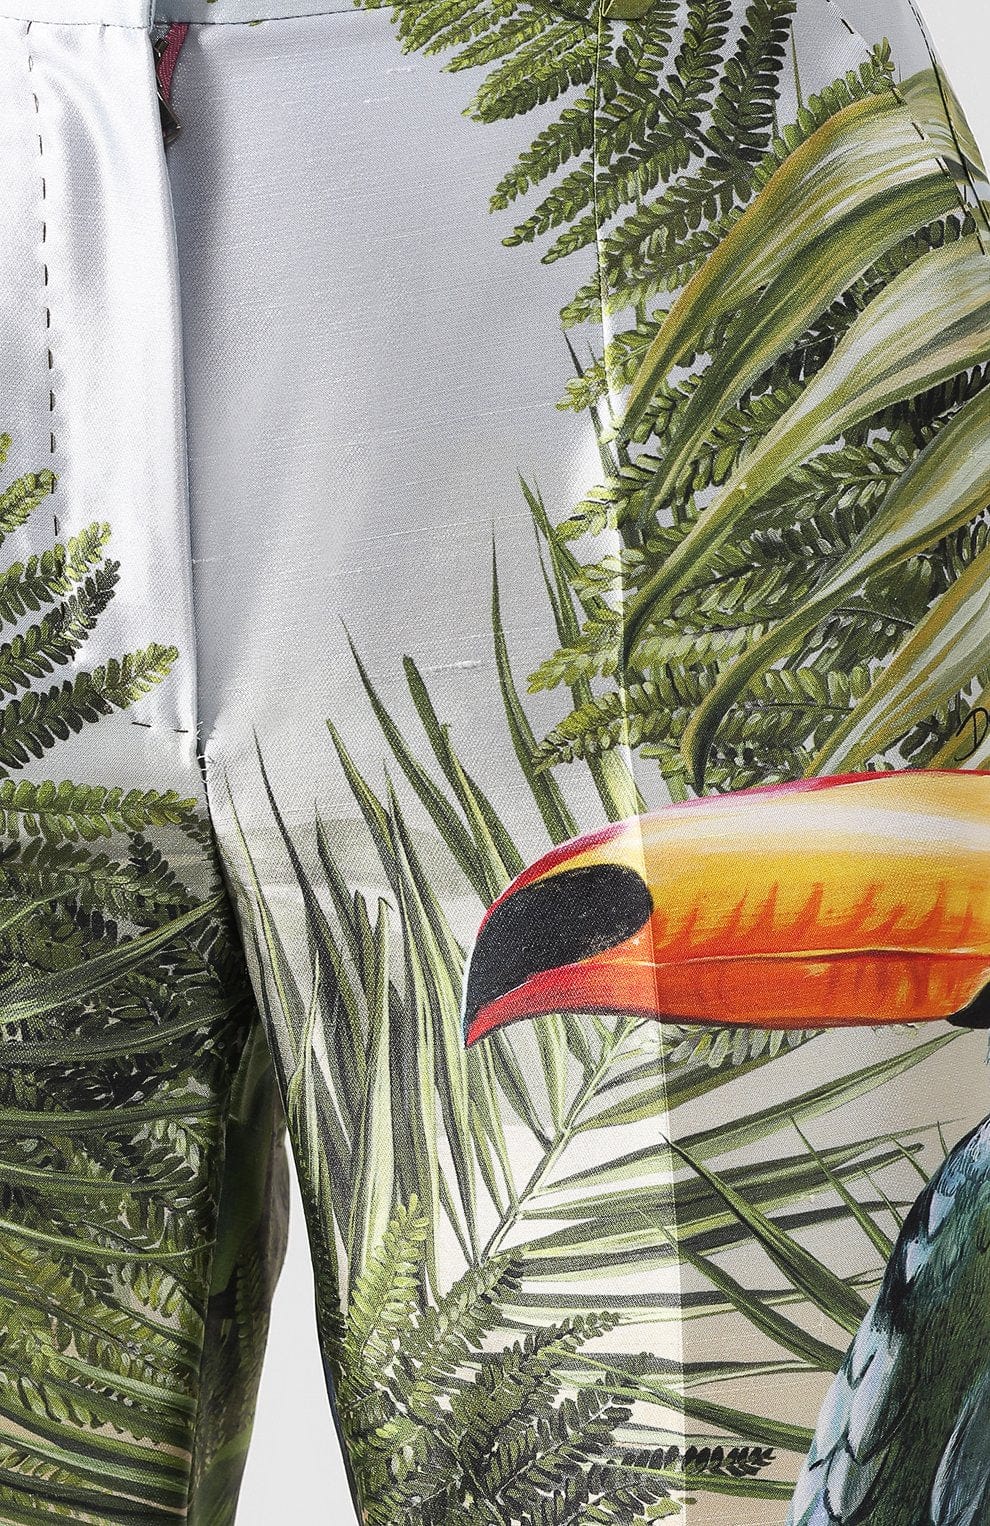 Dolce & Gabbana Jungle-Print Cropped Pants